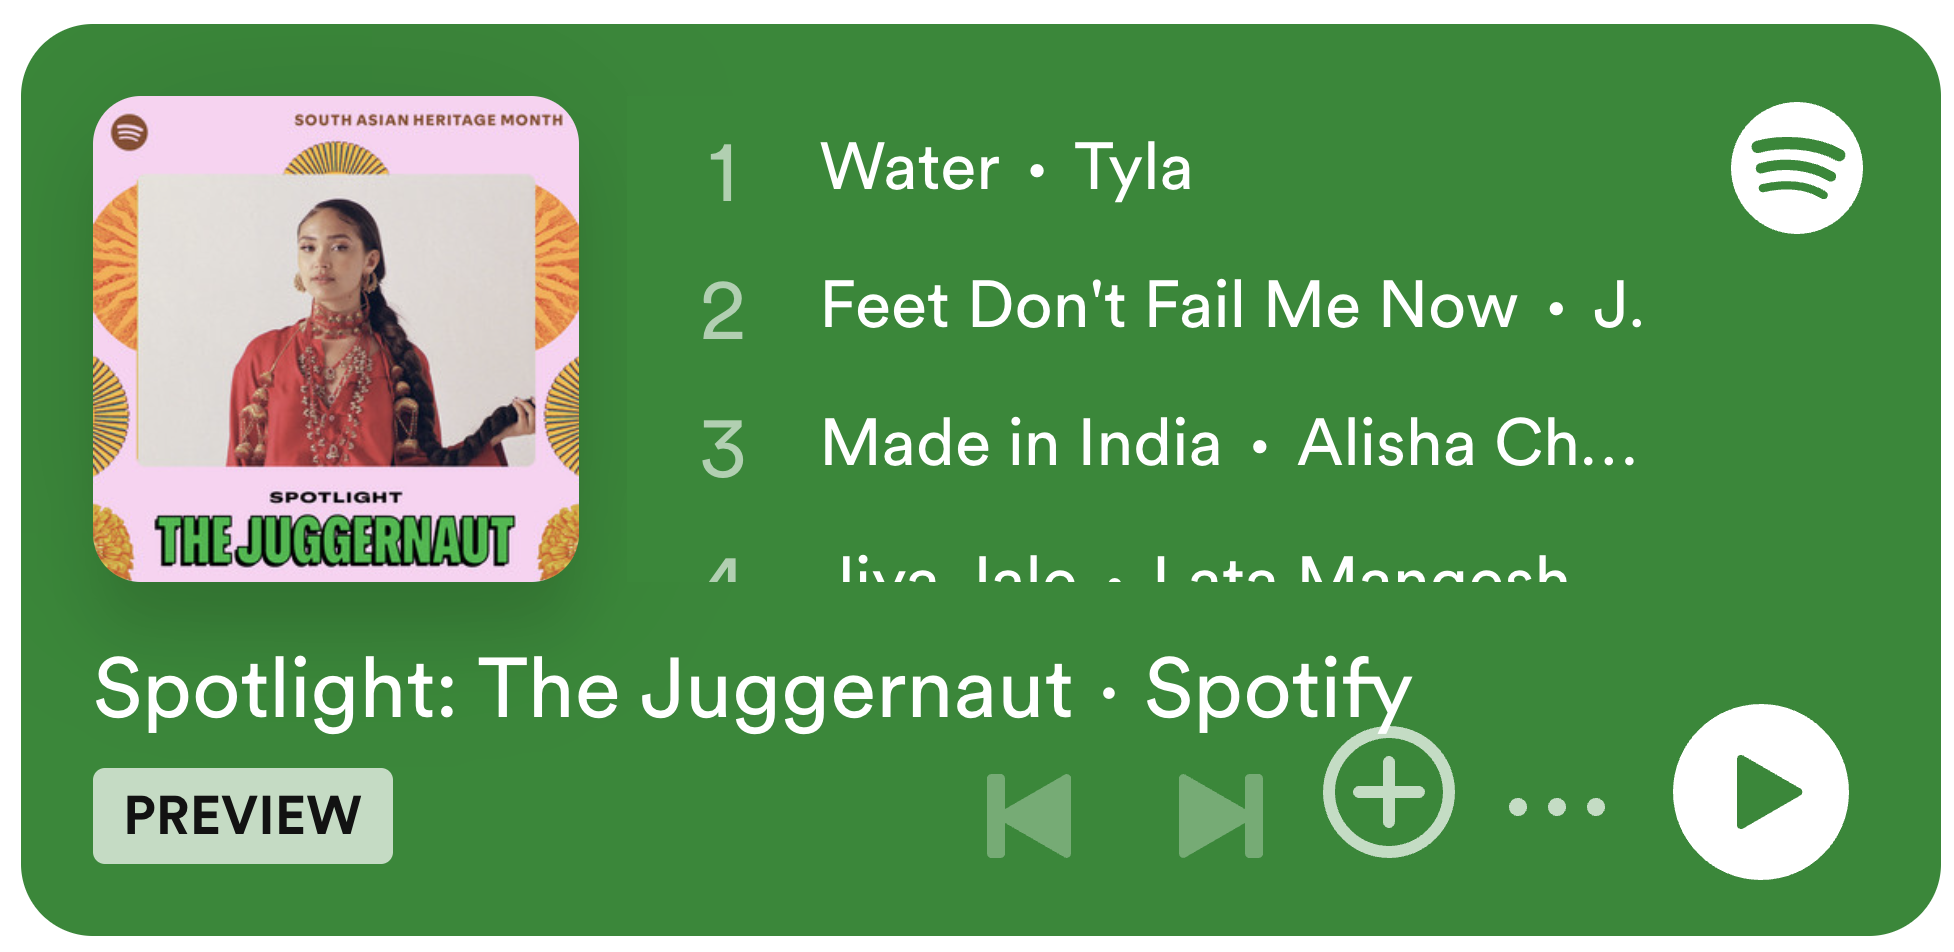 The Juggernaut's Spotify Playlist